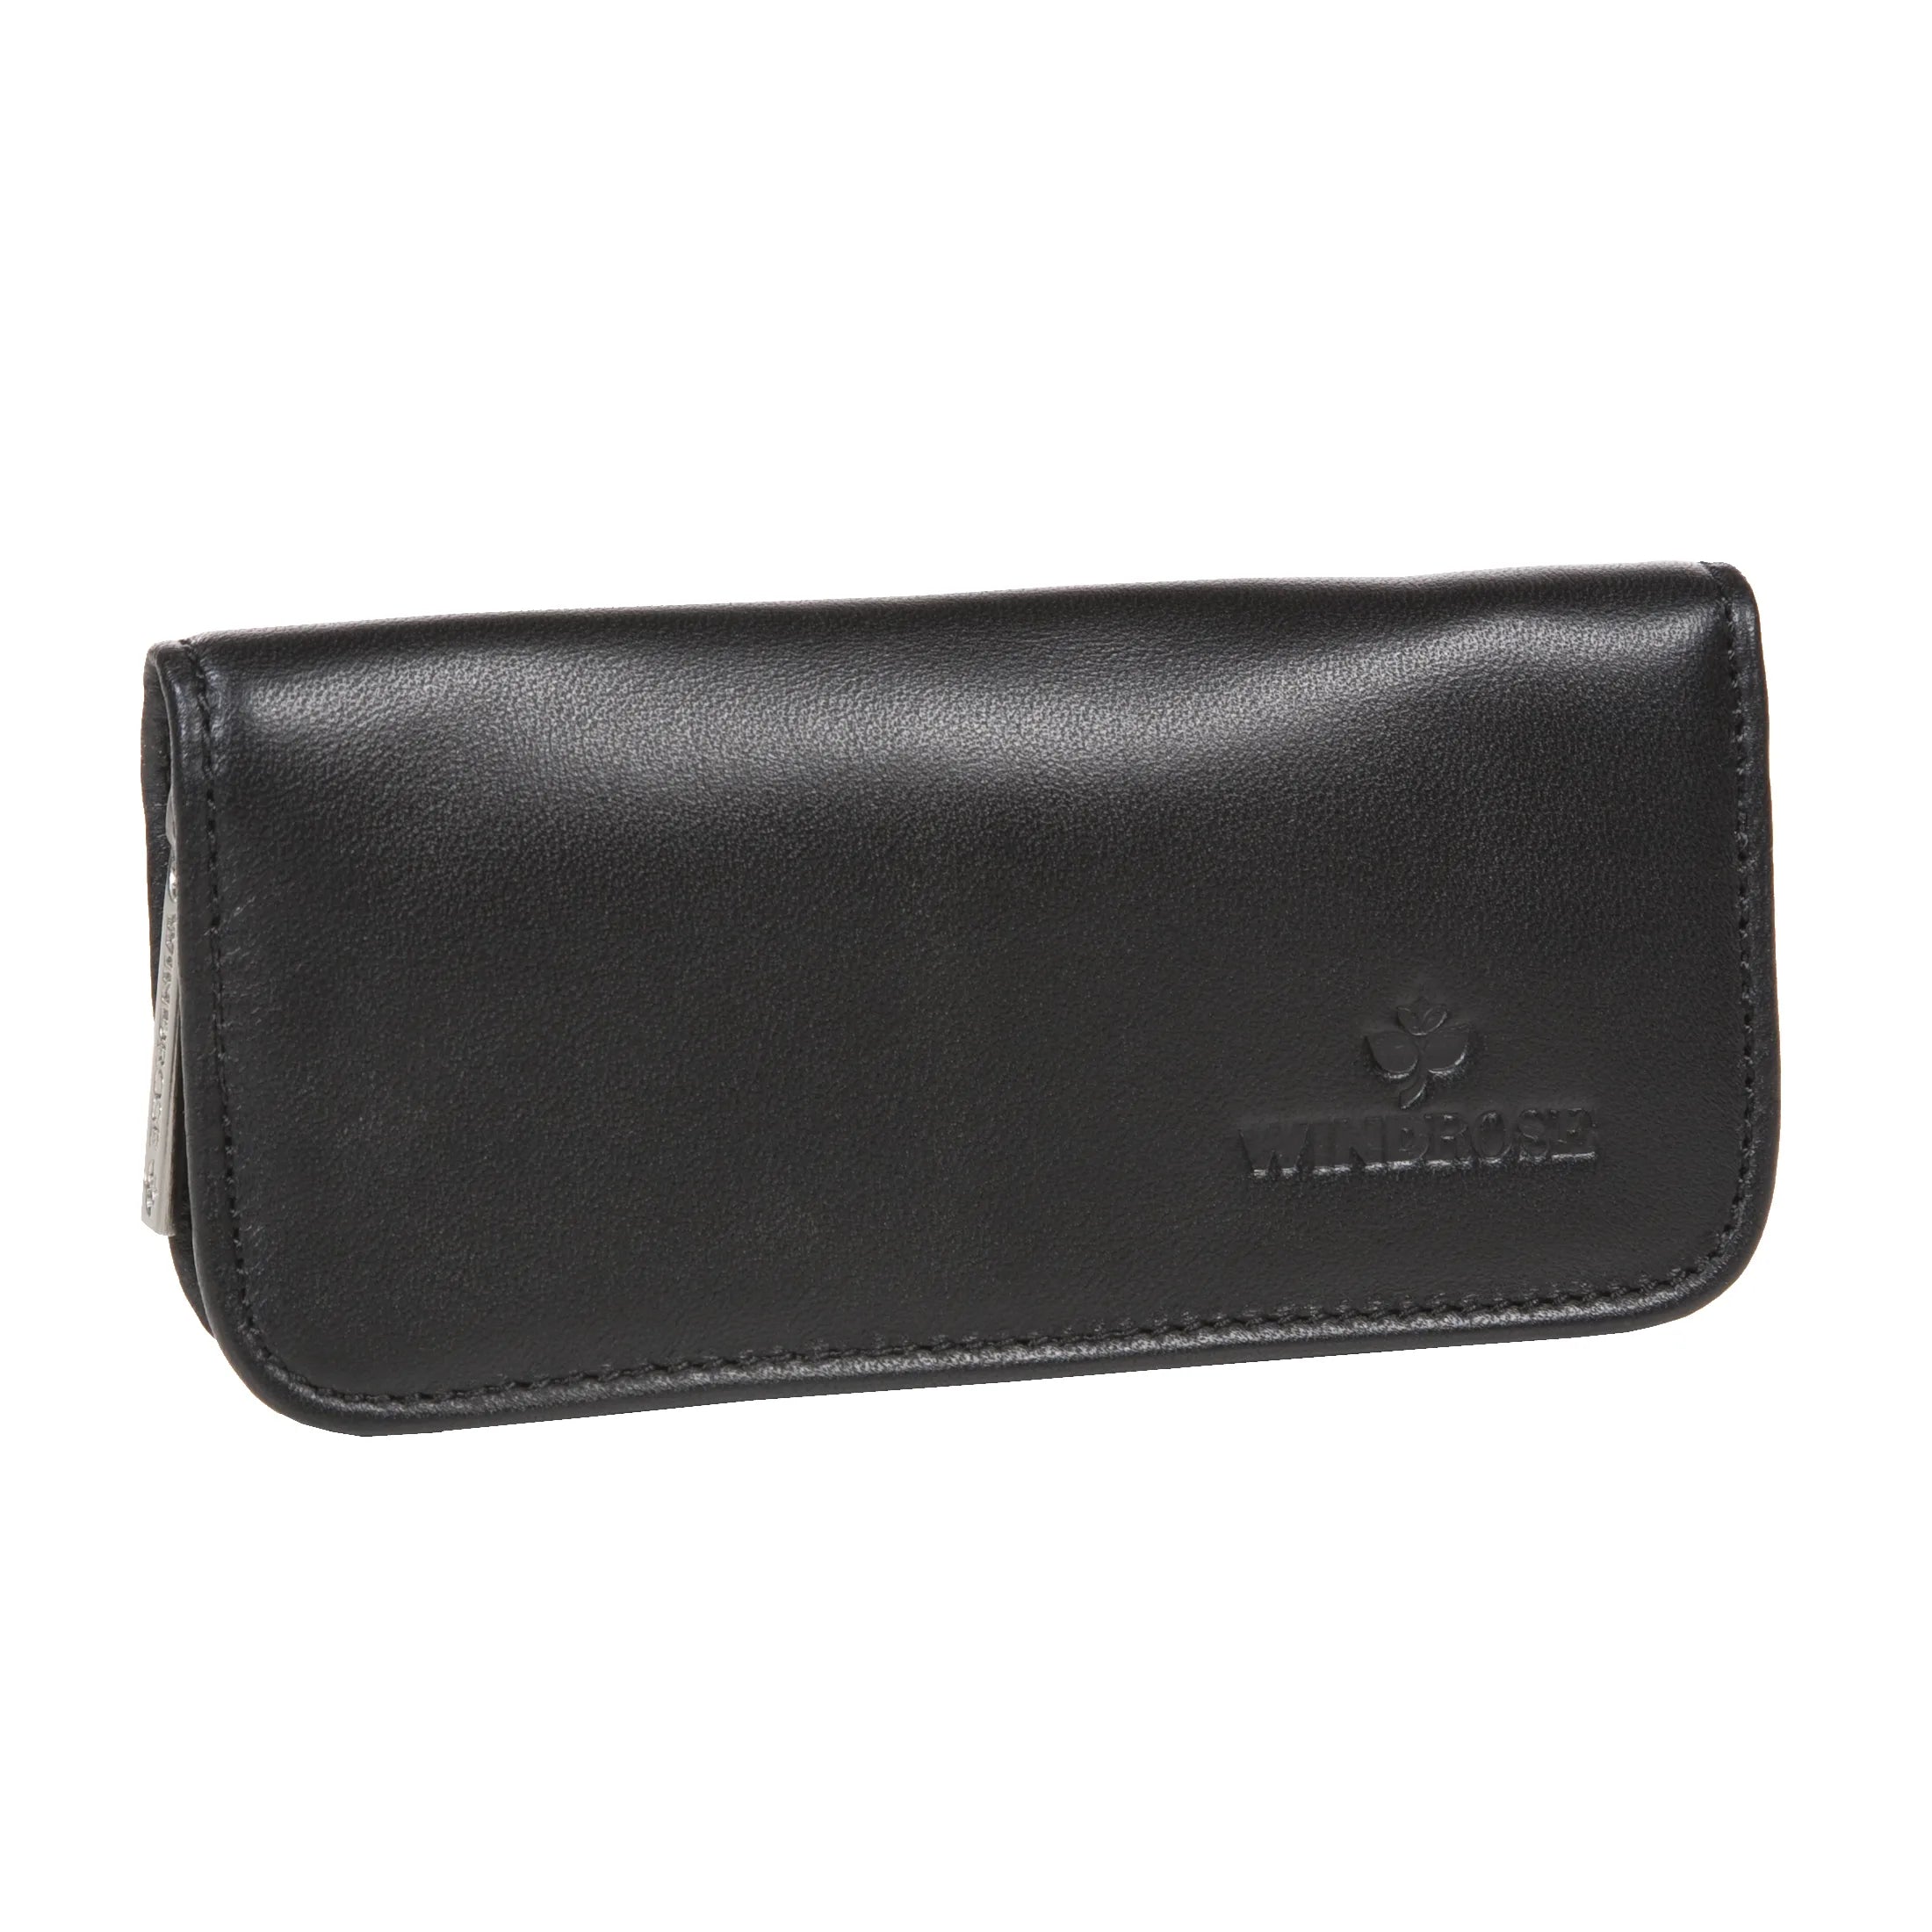 Windrose Nappa Manicure leather zipper case 14 cm - black